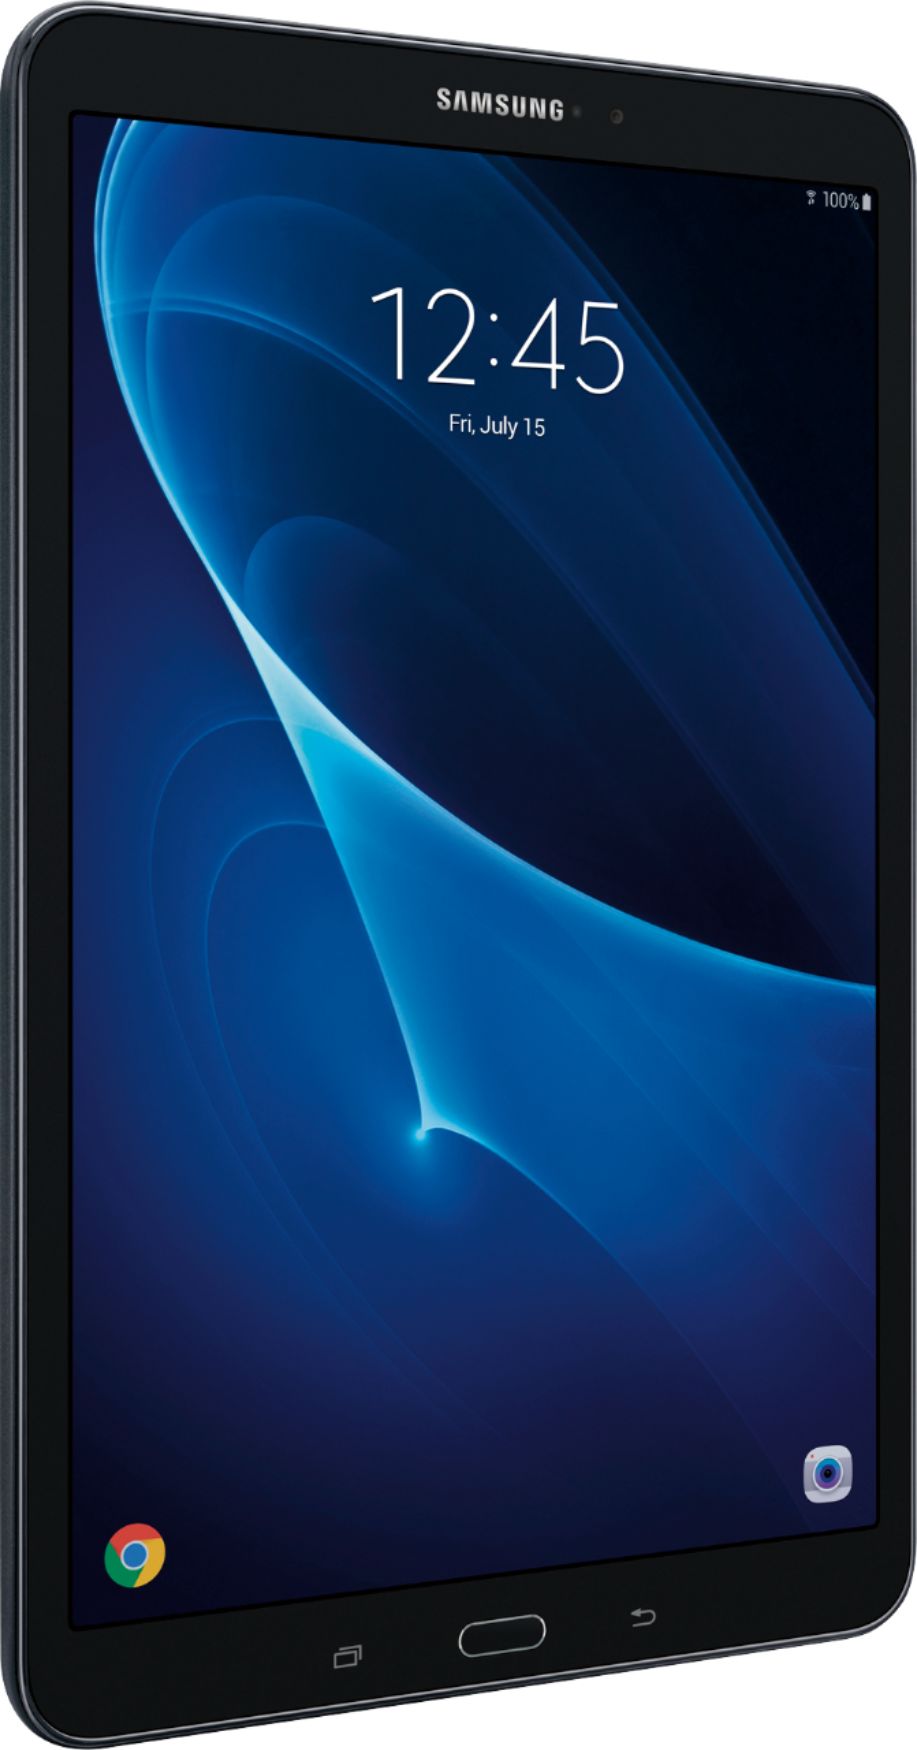 ginder Onzin overdrijven Samsung Galaxy Tab A 10.1" 16GB Black SM-T580NZKAXAR - Best Buy